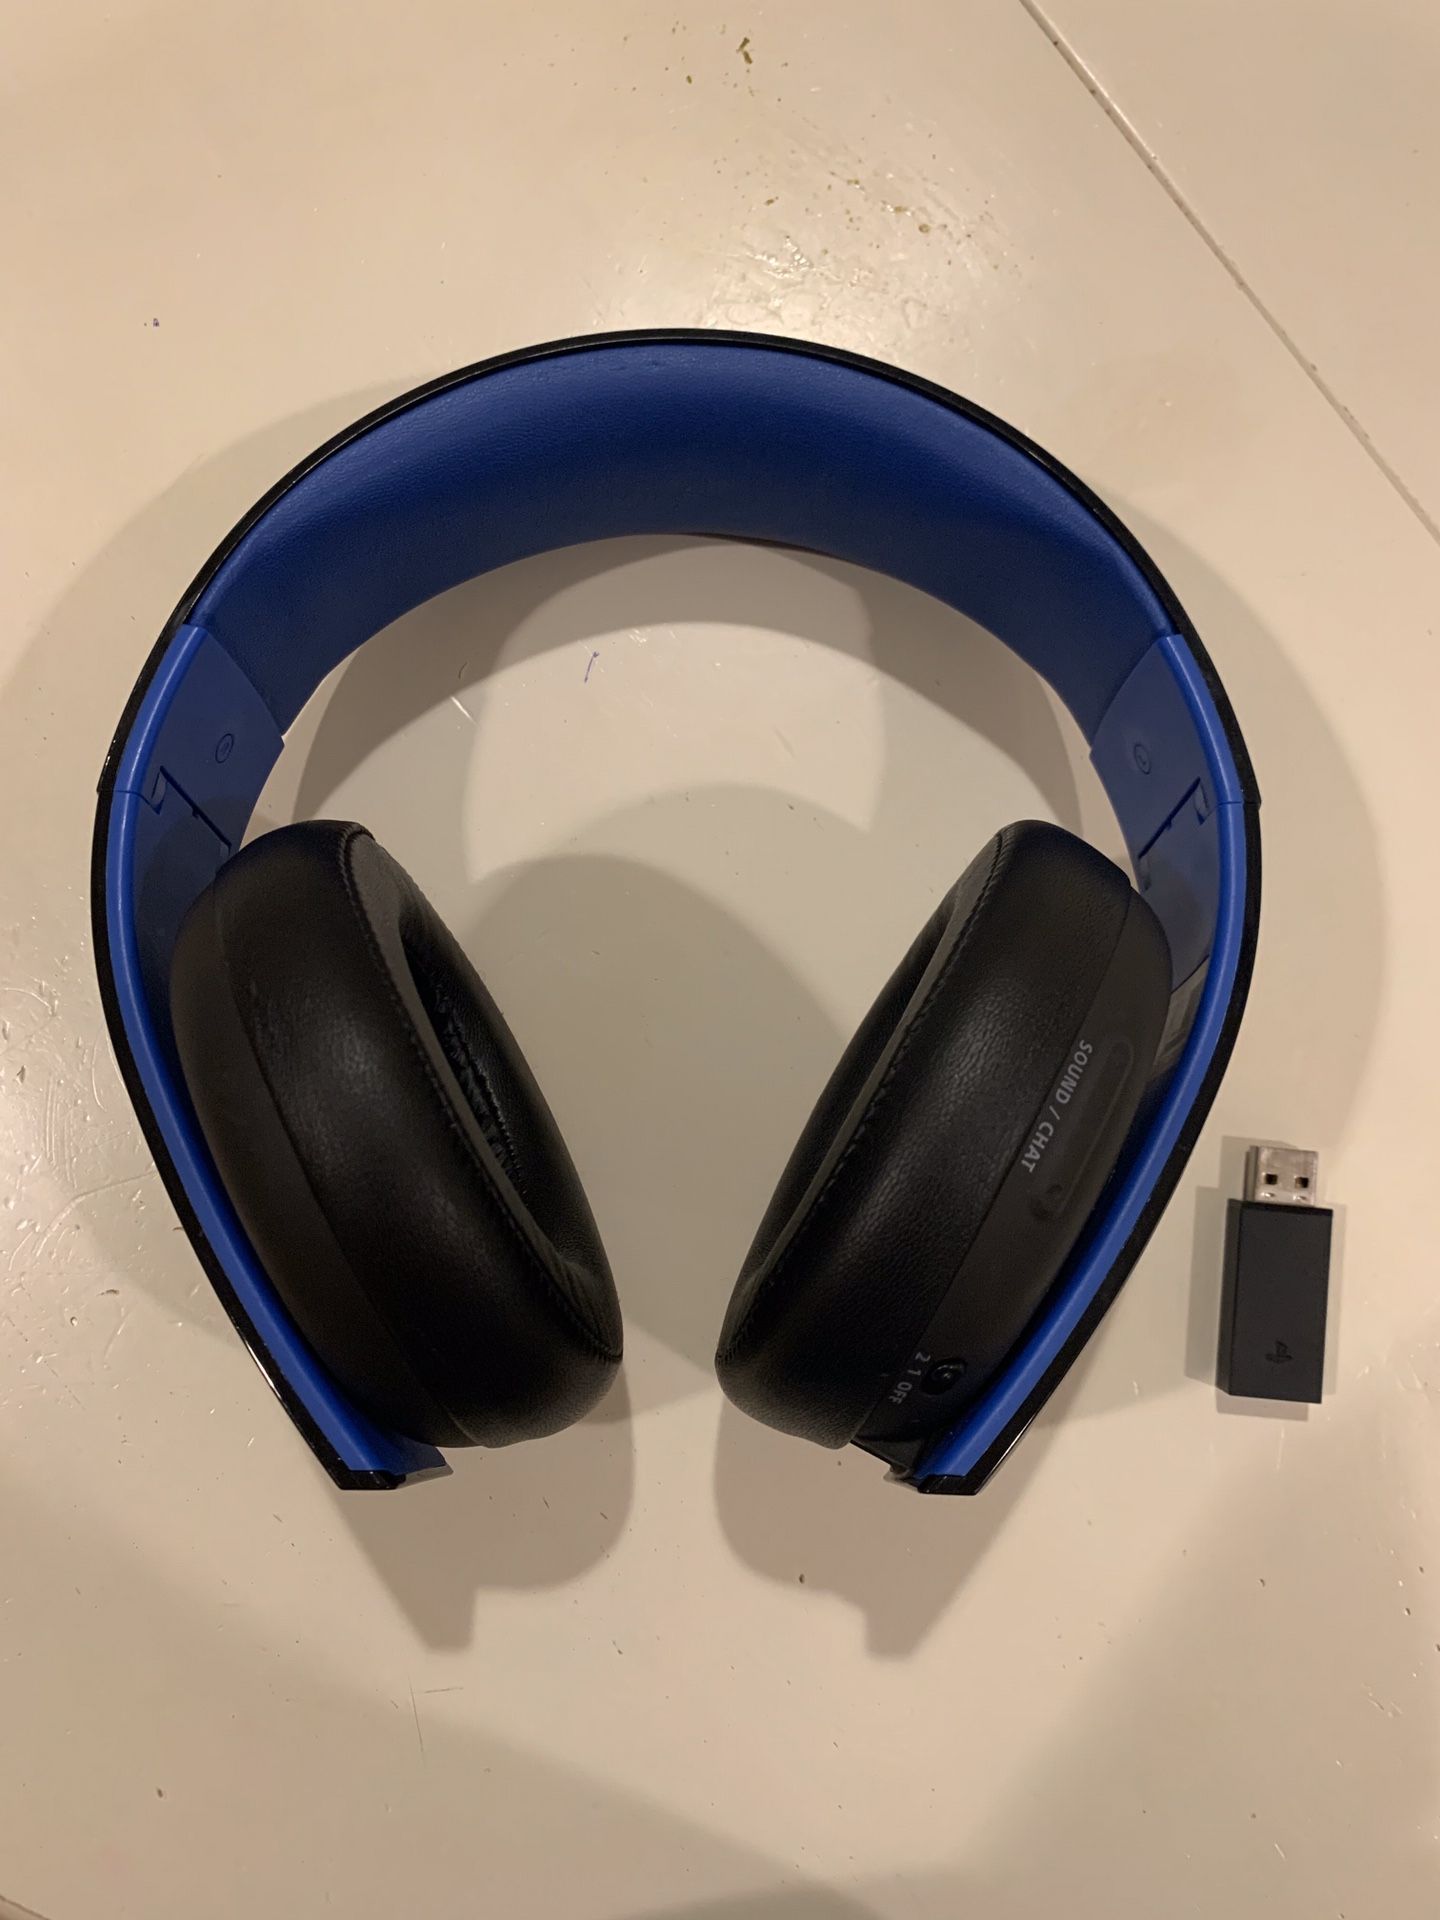 PS4 wireless headphones